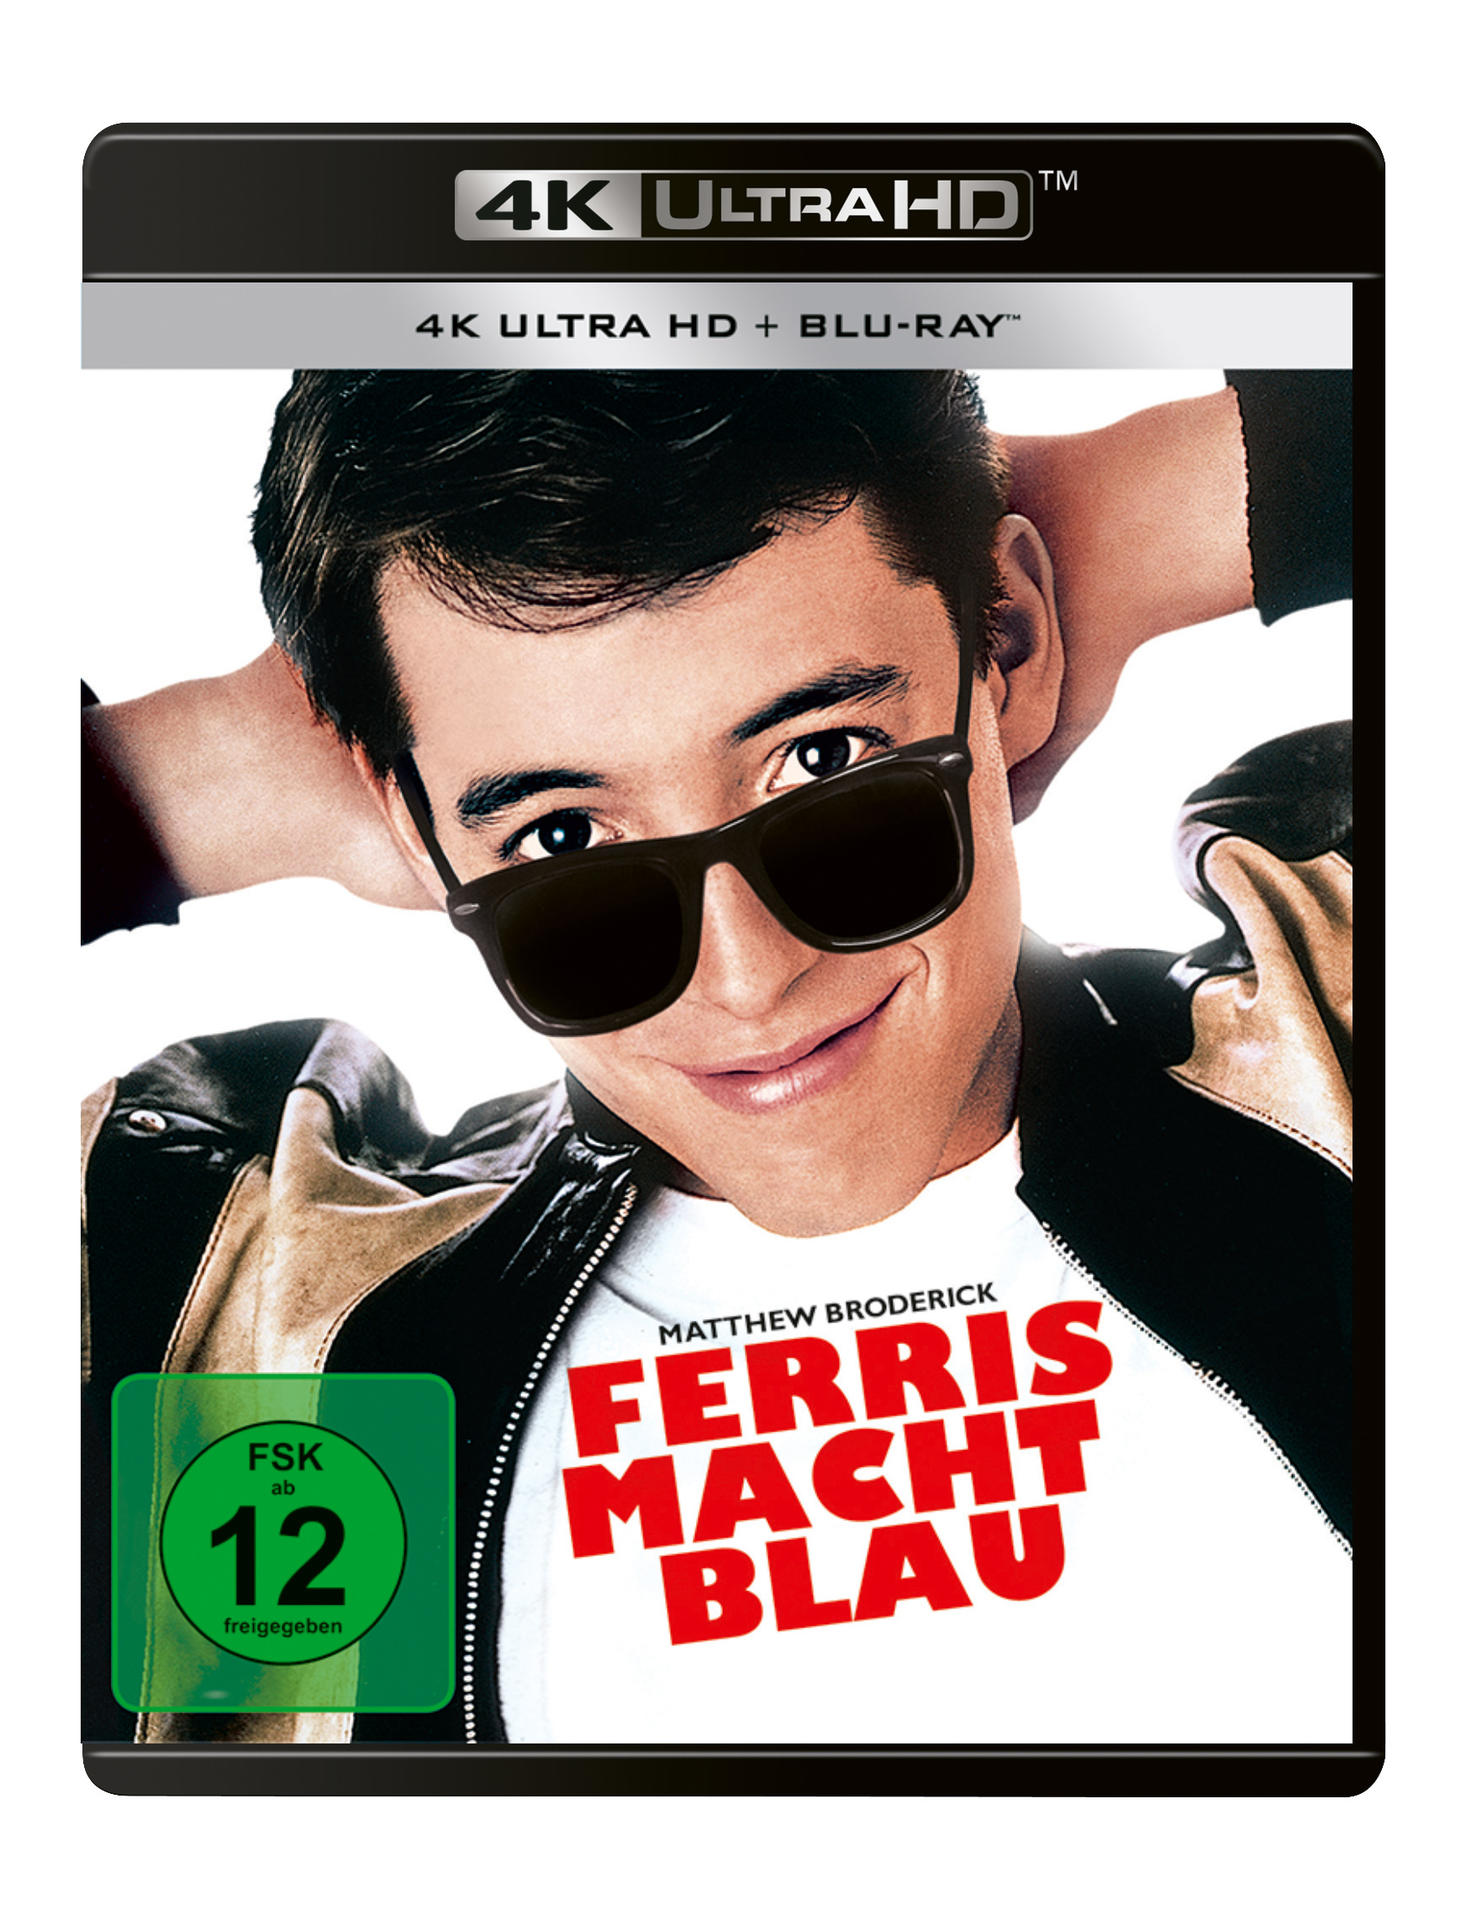 macht Ultra 4K HD Blu-ray blau Ferris